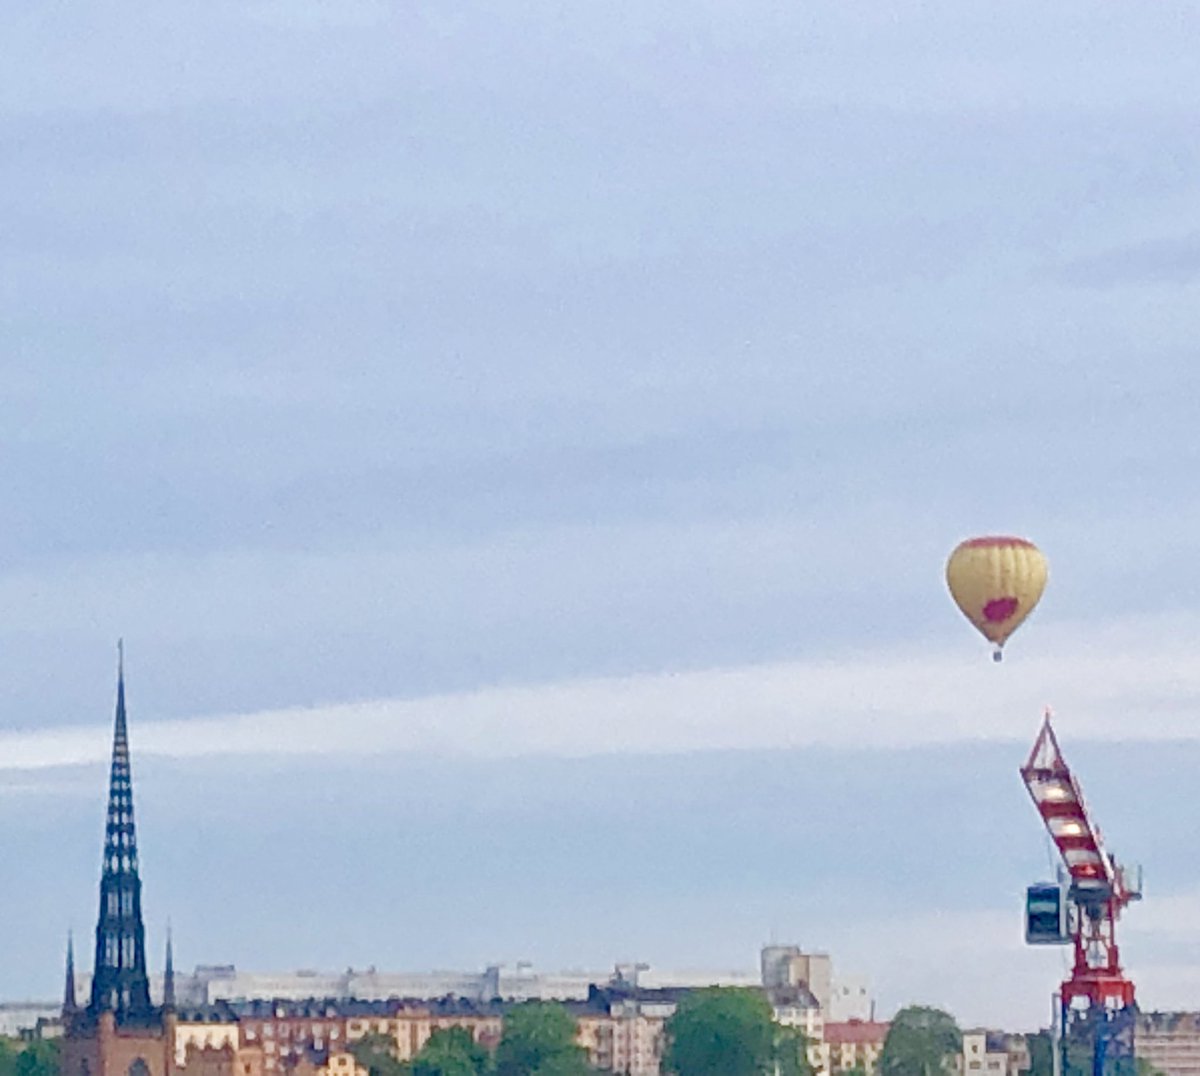 .@MarvelousCrane 

Spire, crane and balloon 

Stockholm style https://t.co/LreHFvPqXp